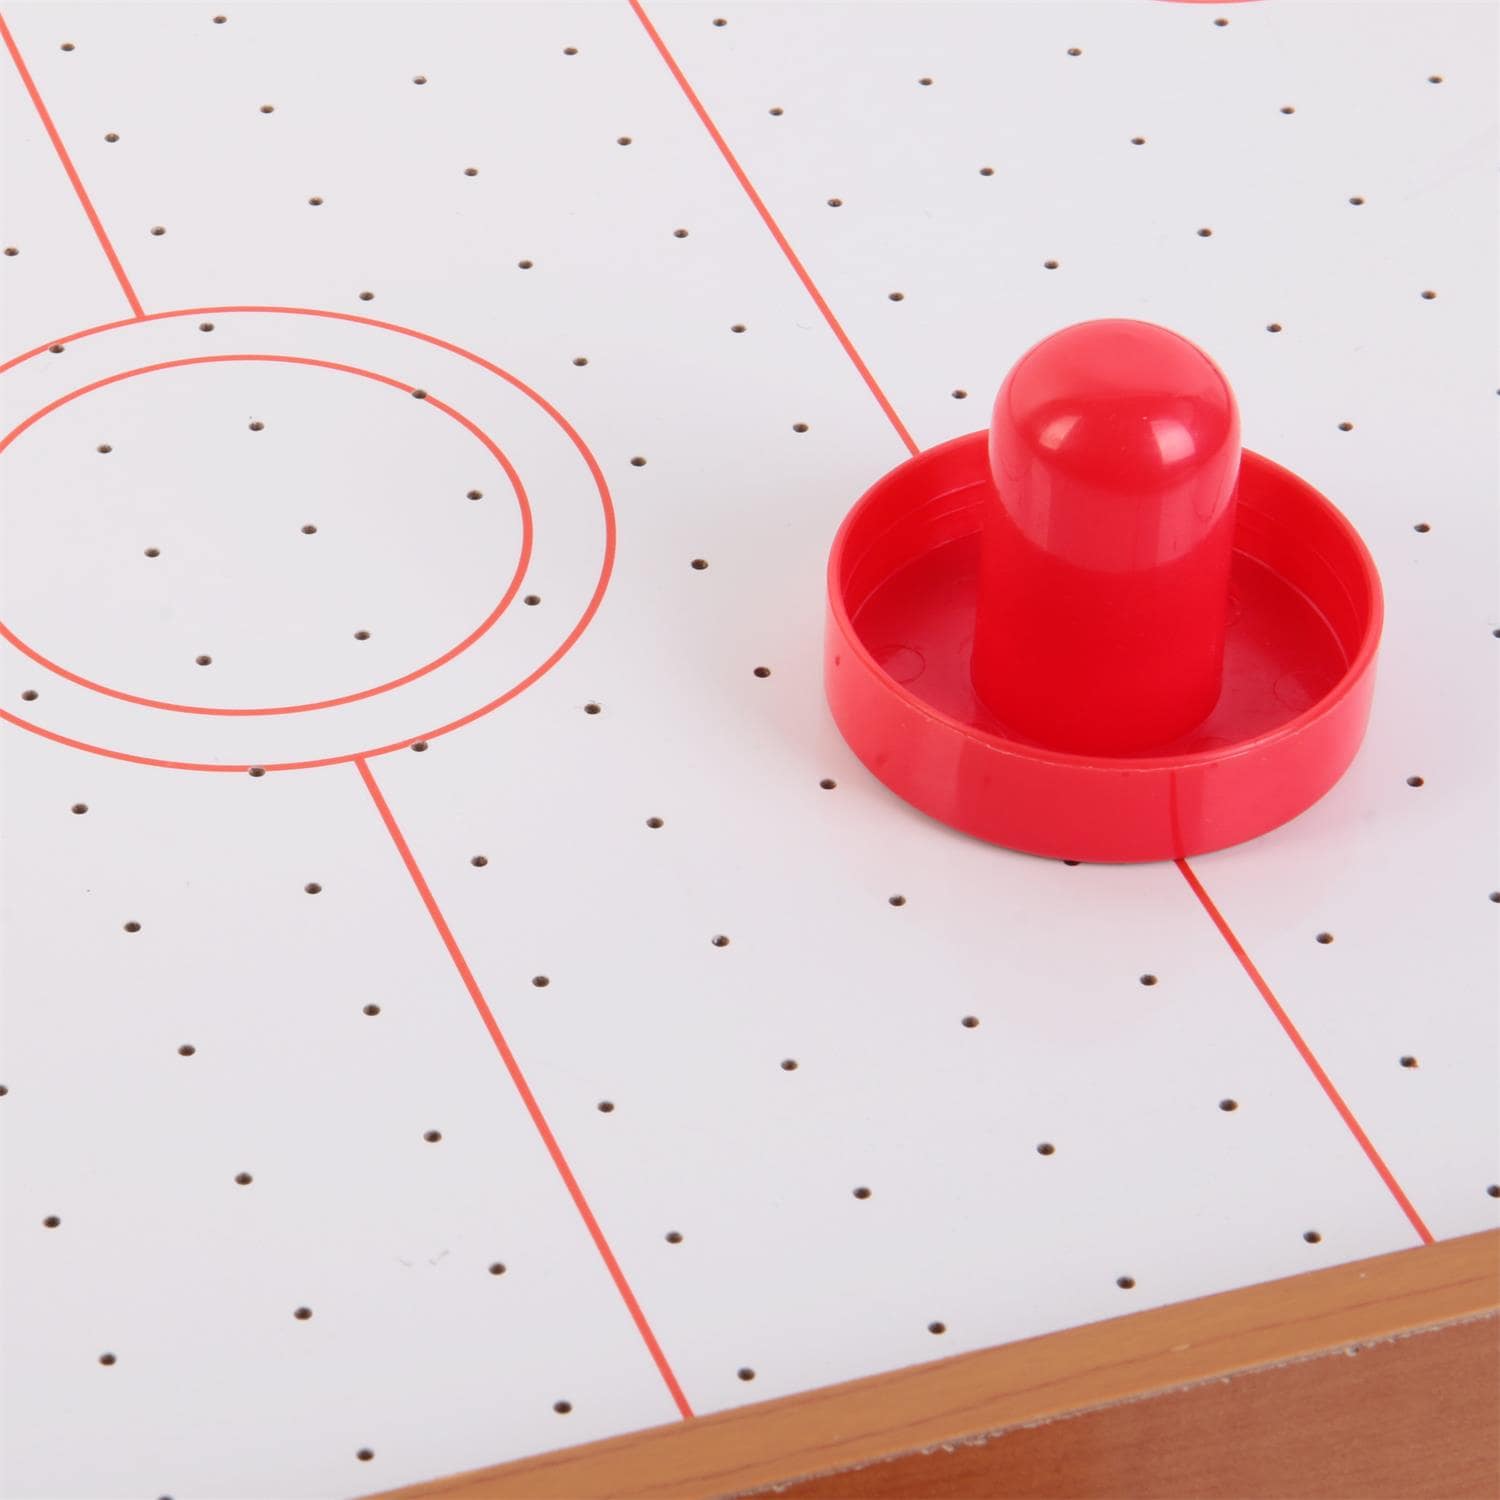 jeu table air hockey air pulse palets poigne jouet mister gadget mini portable 4-min